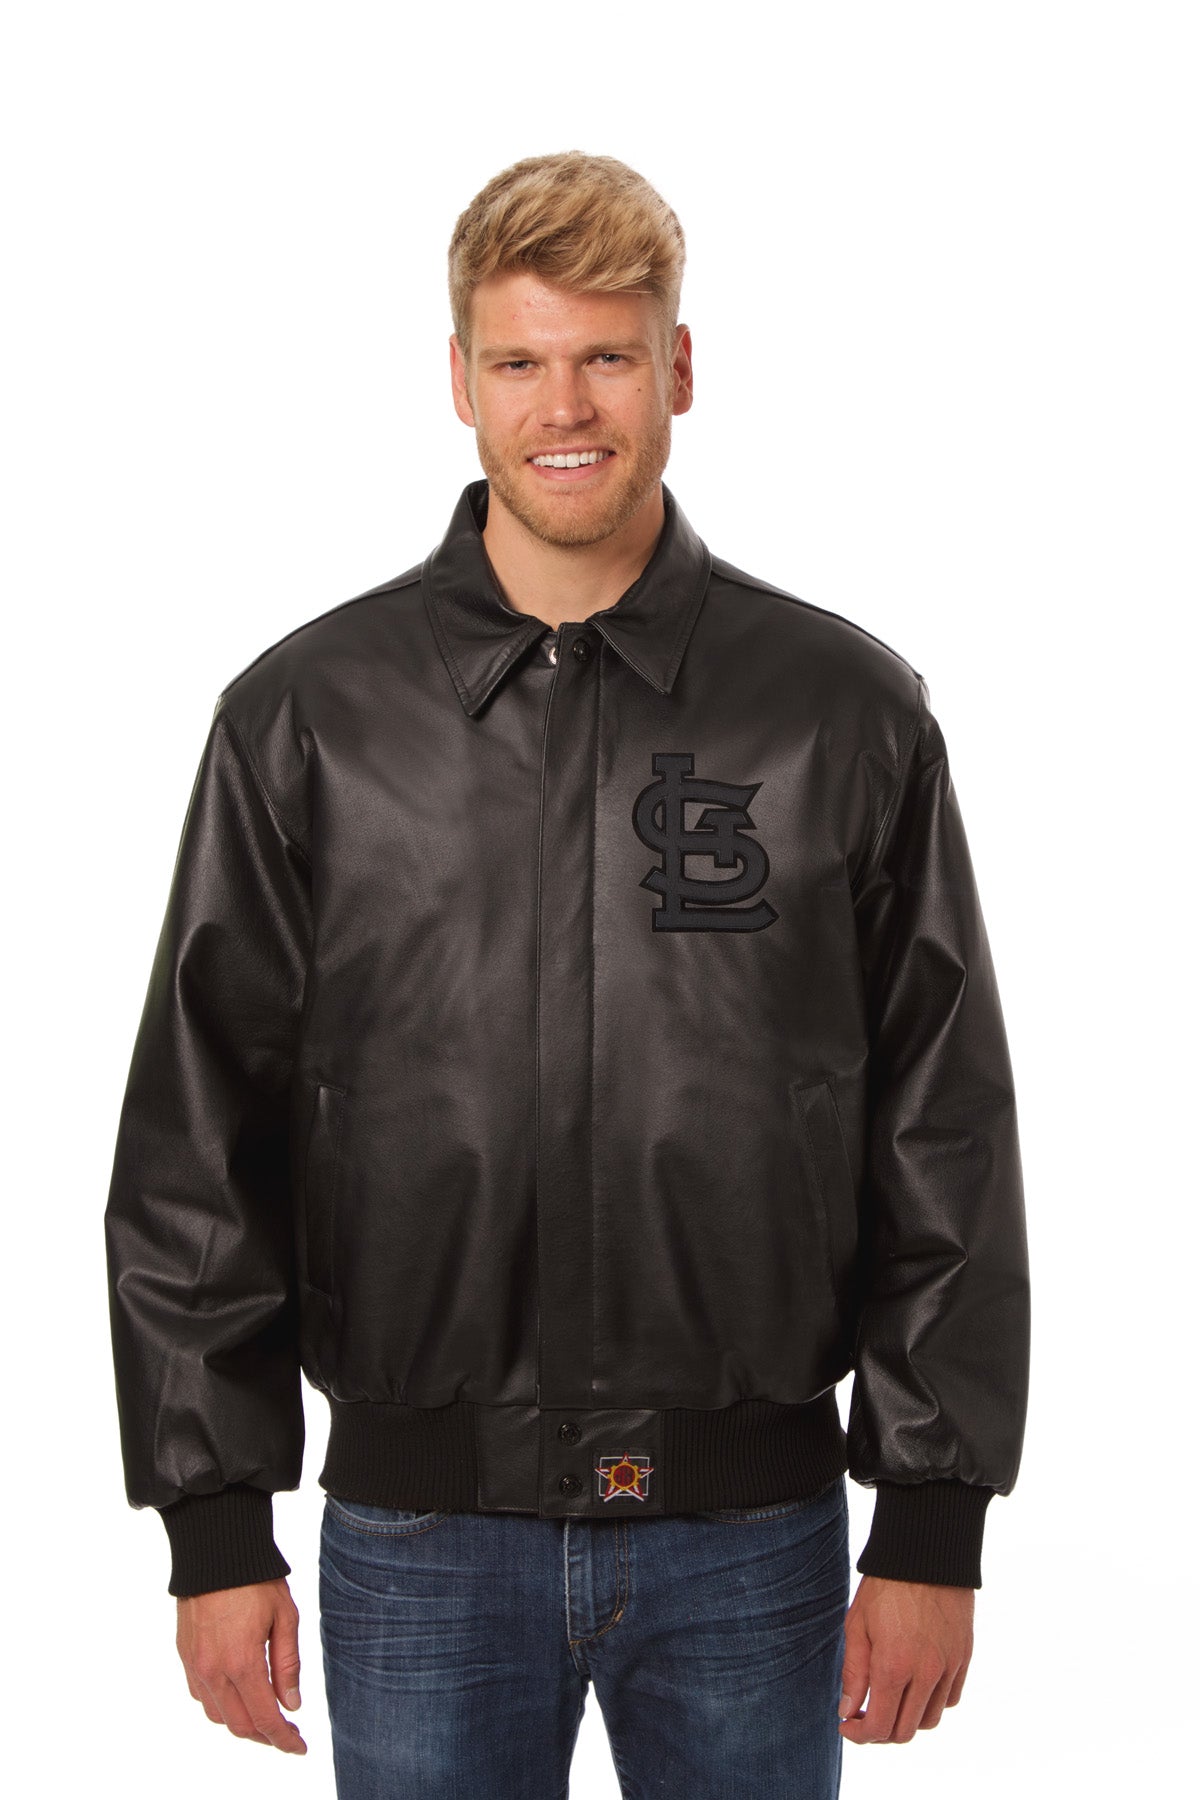 St. Louis Cardinals Full Leather Jacket - Black/Black | J.H. Sports Jackets